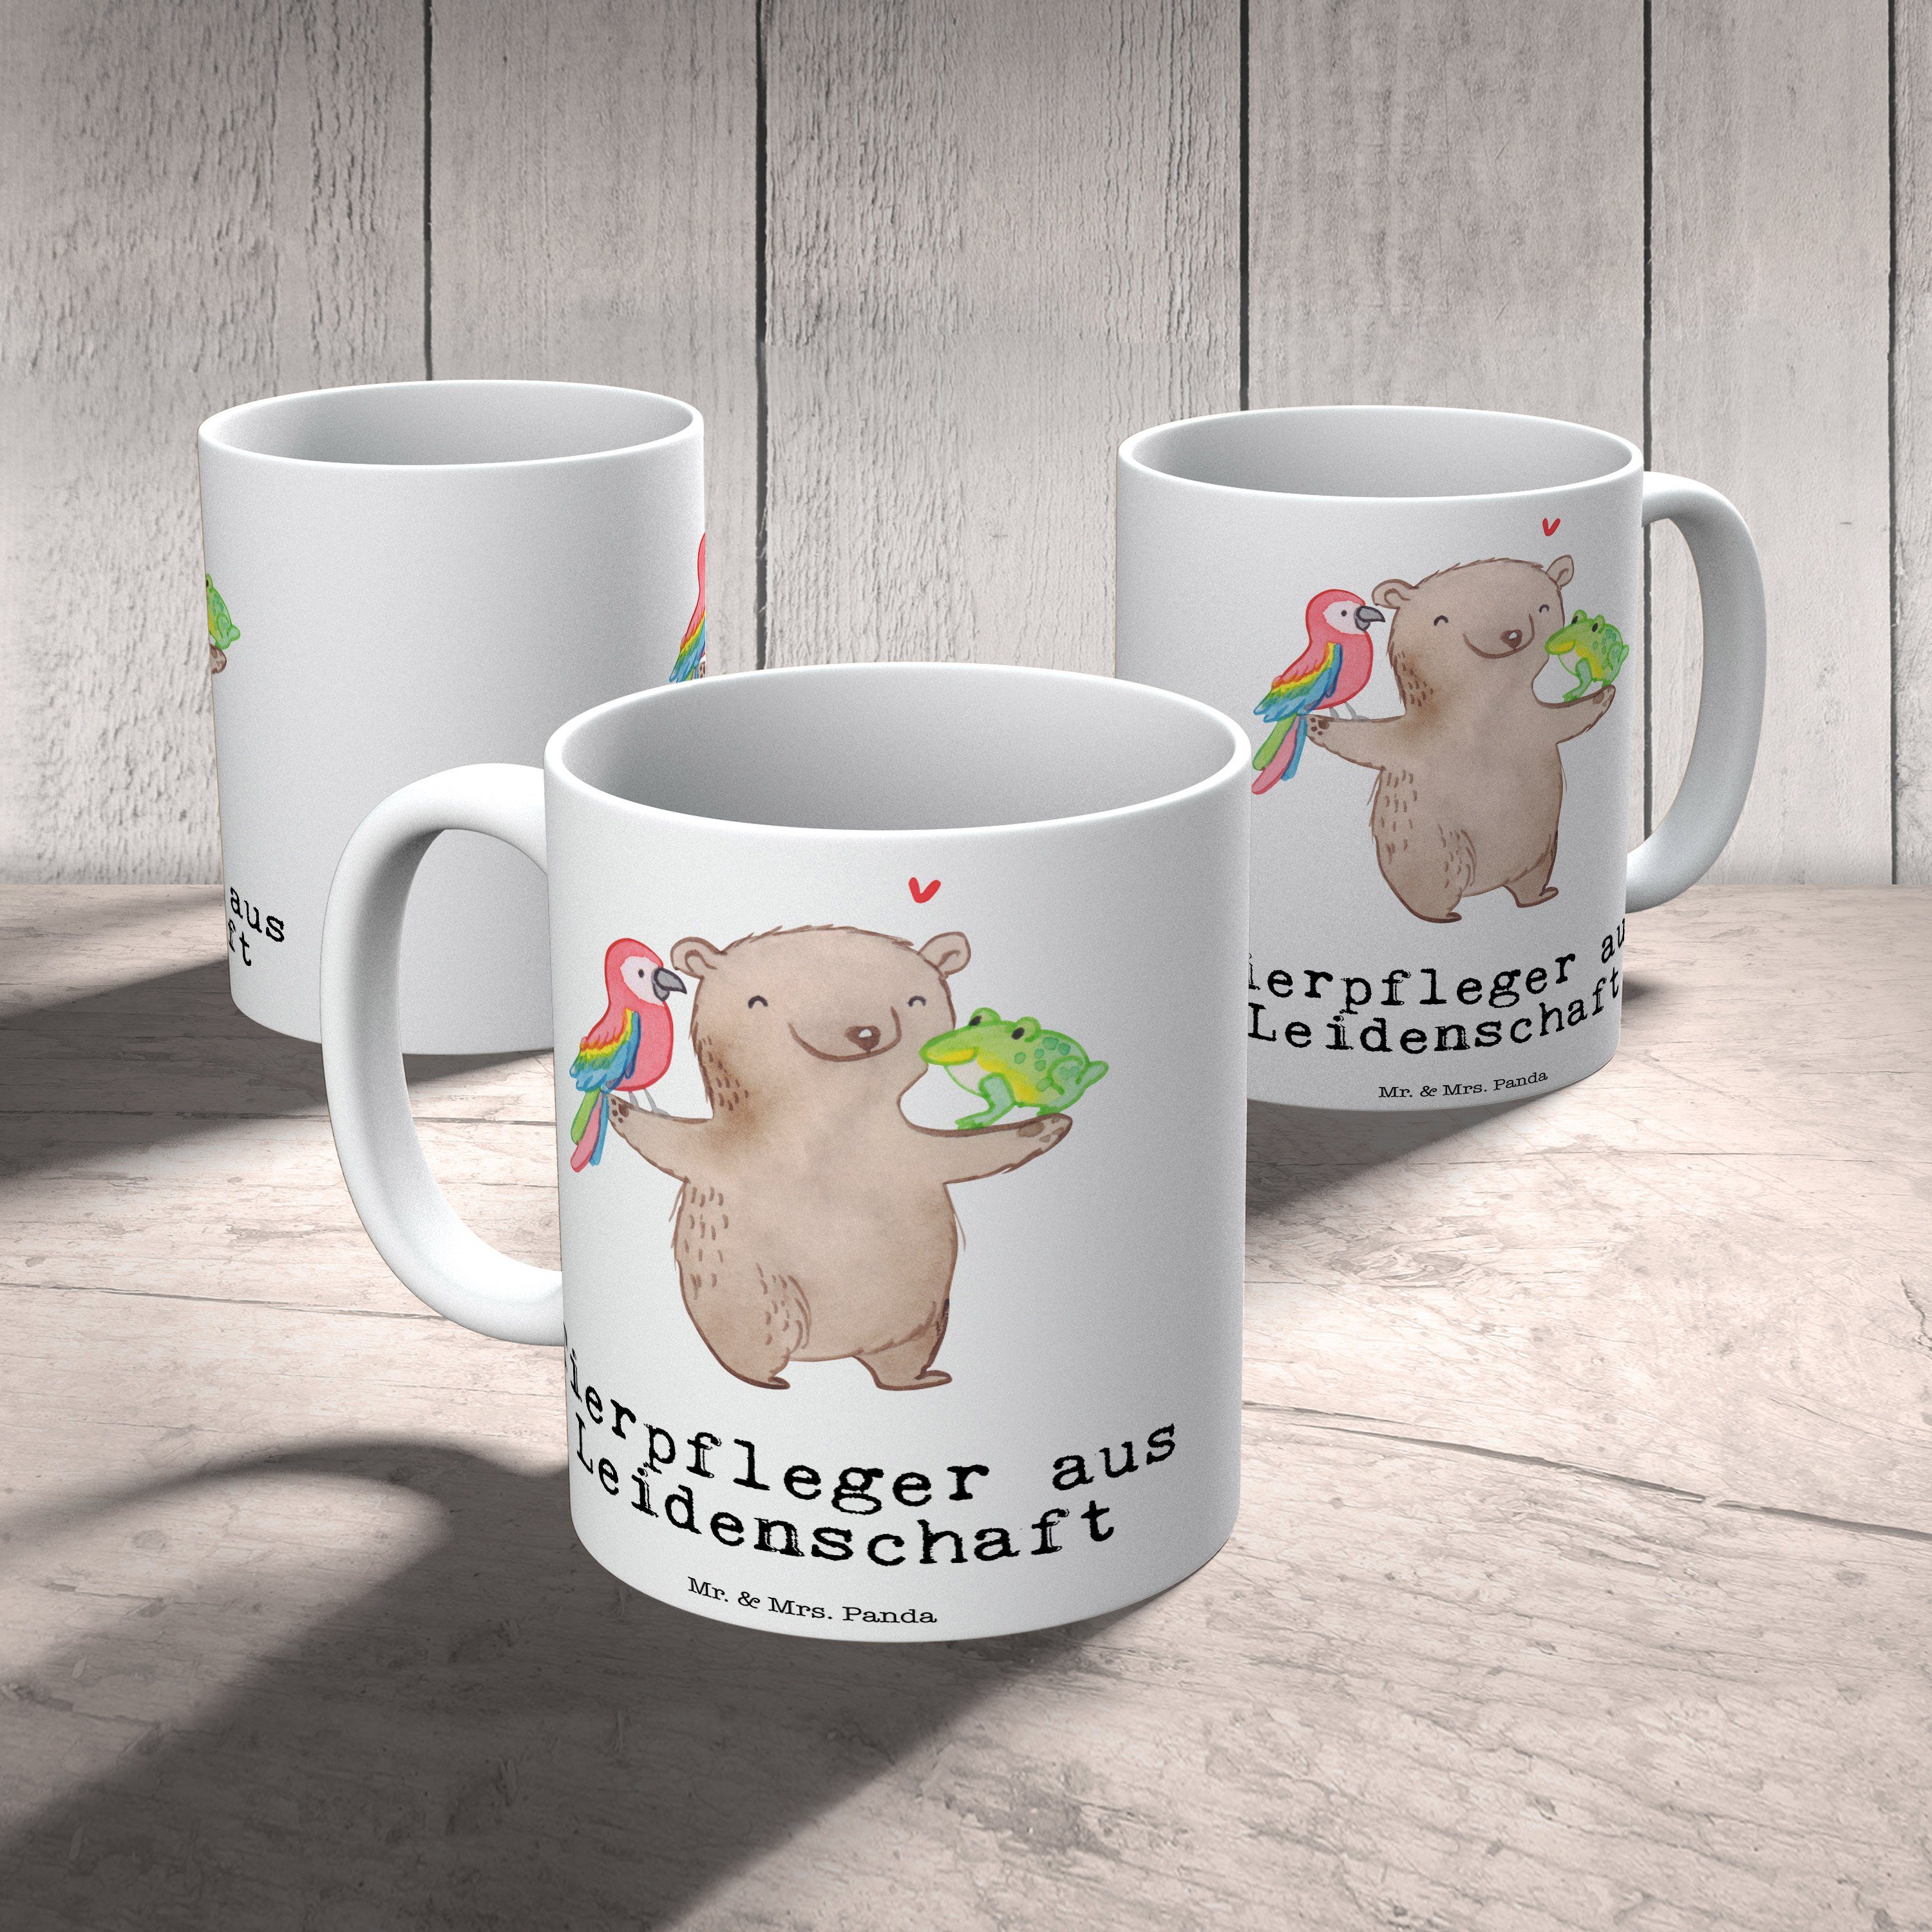 Mr. & Mrs. Panda Tasse aus - Weiß Becher, - Geschenk, Keramik Teetasse, Leidenschaft Tierpfleger Kaf